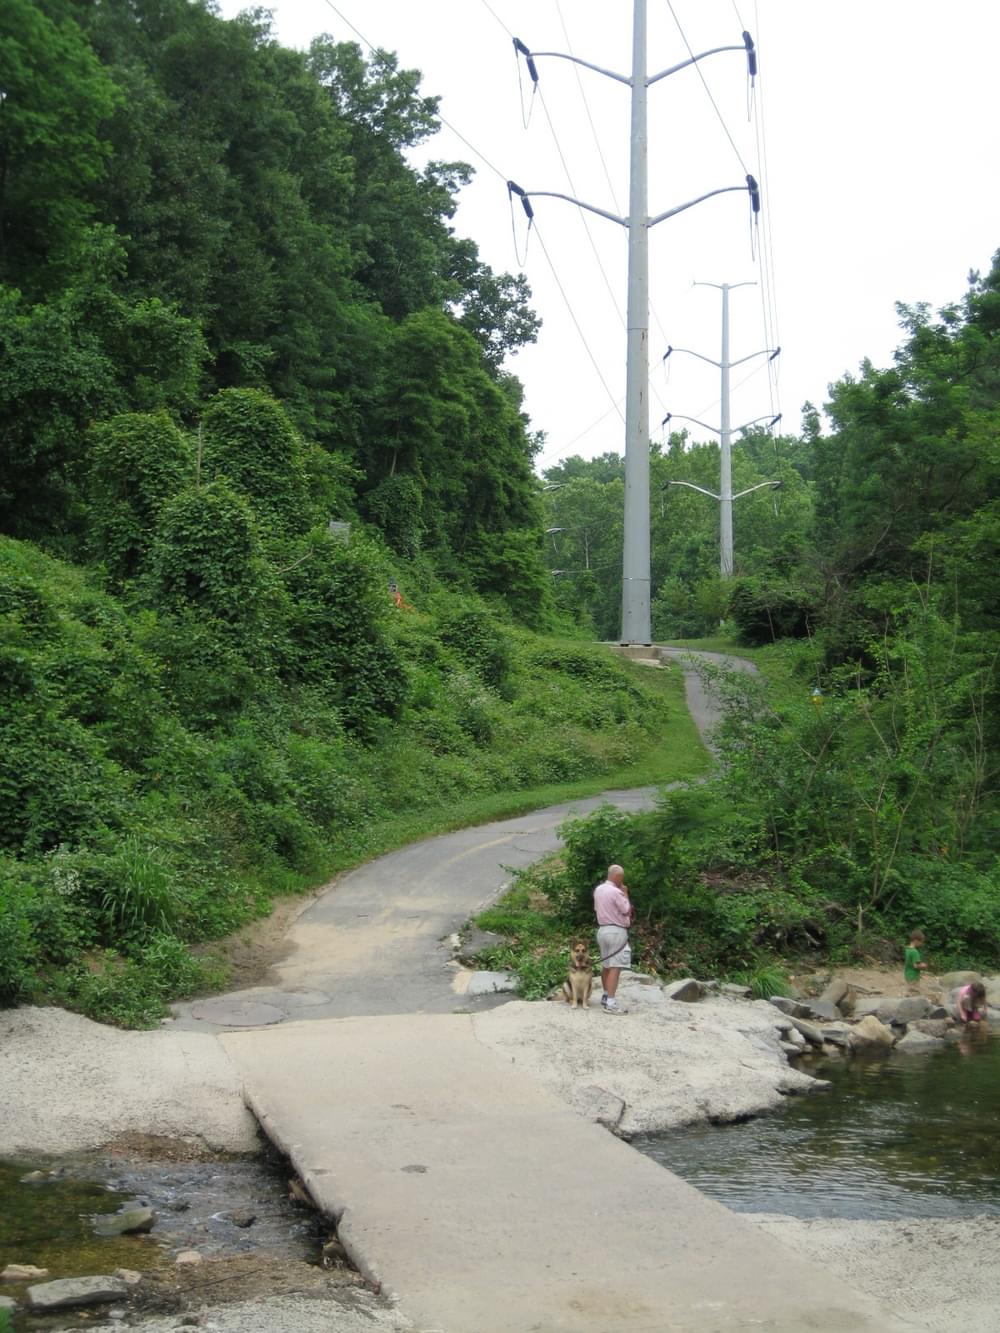 Long Branch Trail at Four Mile Run in Arlington, Virginia is a major power line corridor in the Washington, DC area